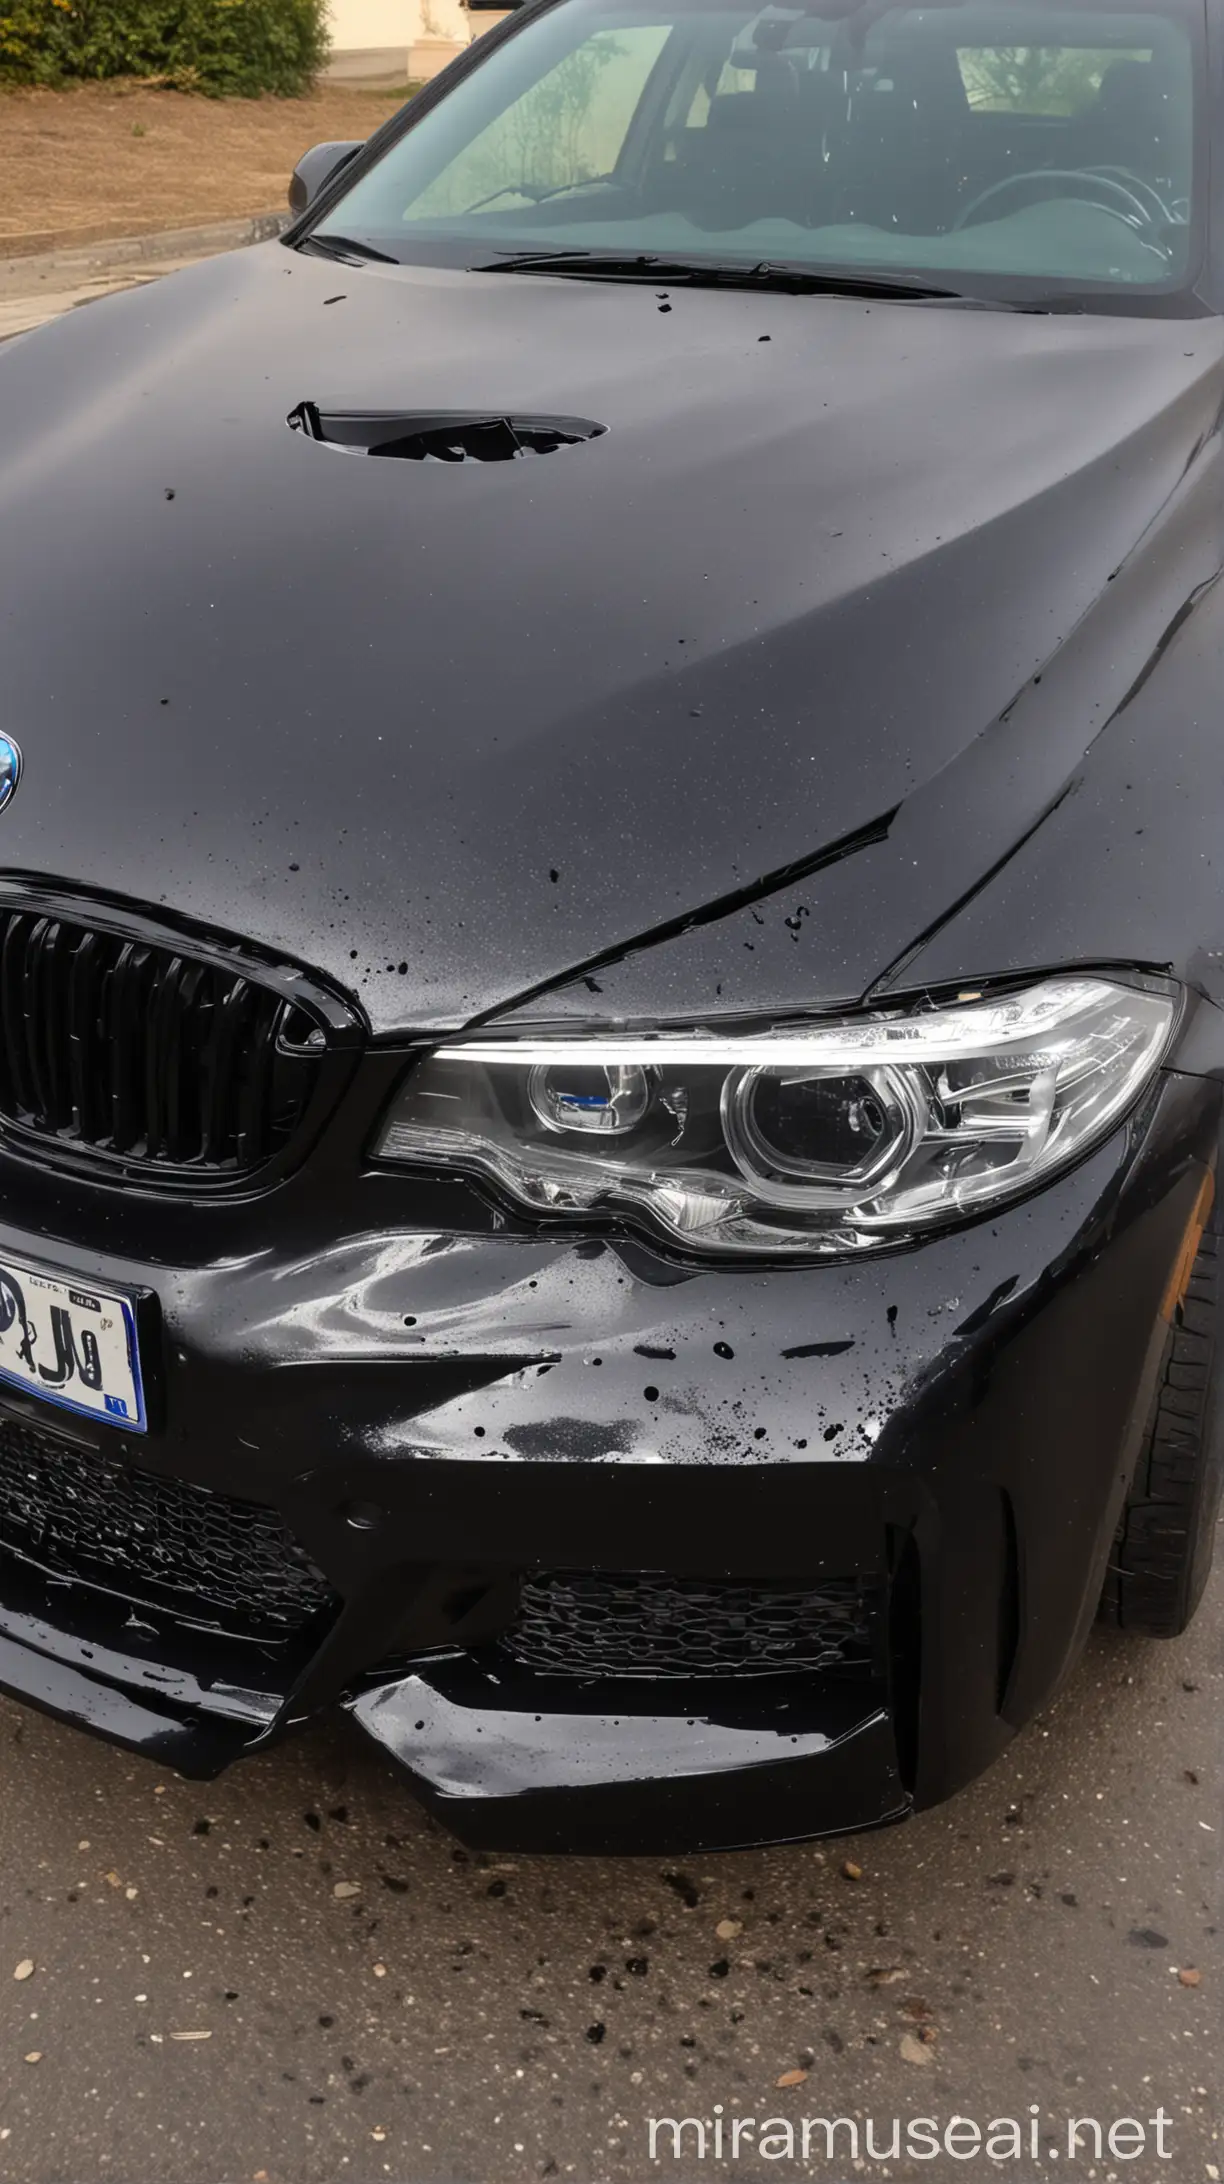 Black polished paint breaks on BMW car with headlights on, vehicle plate "B _6286_PJU